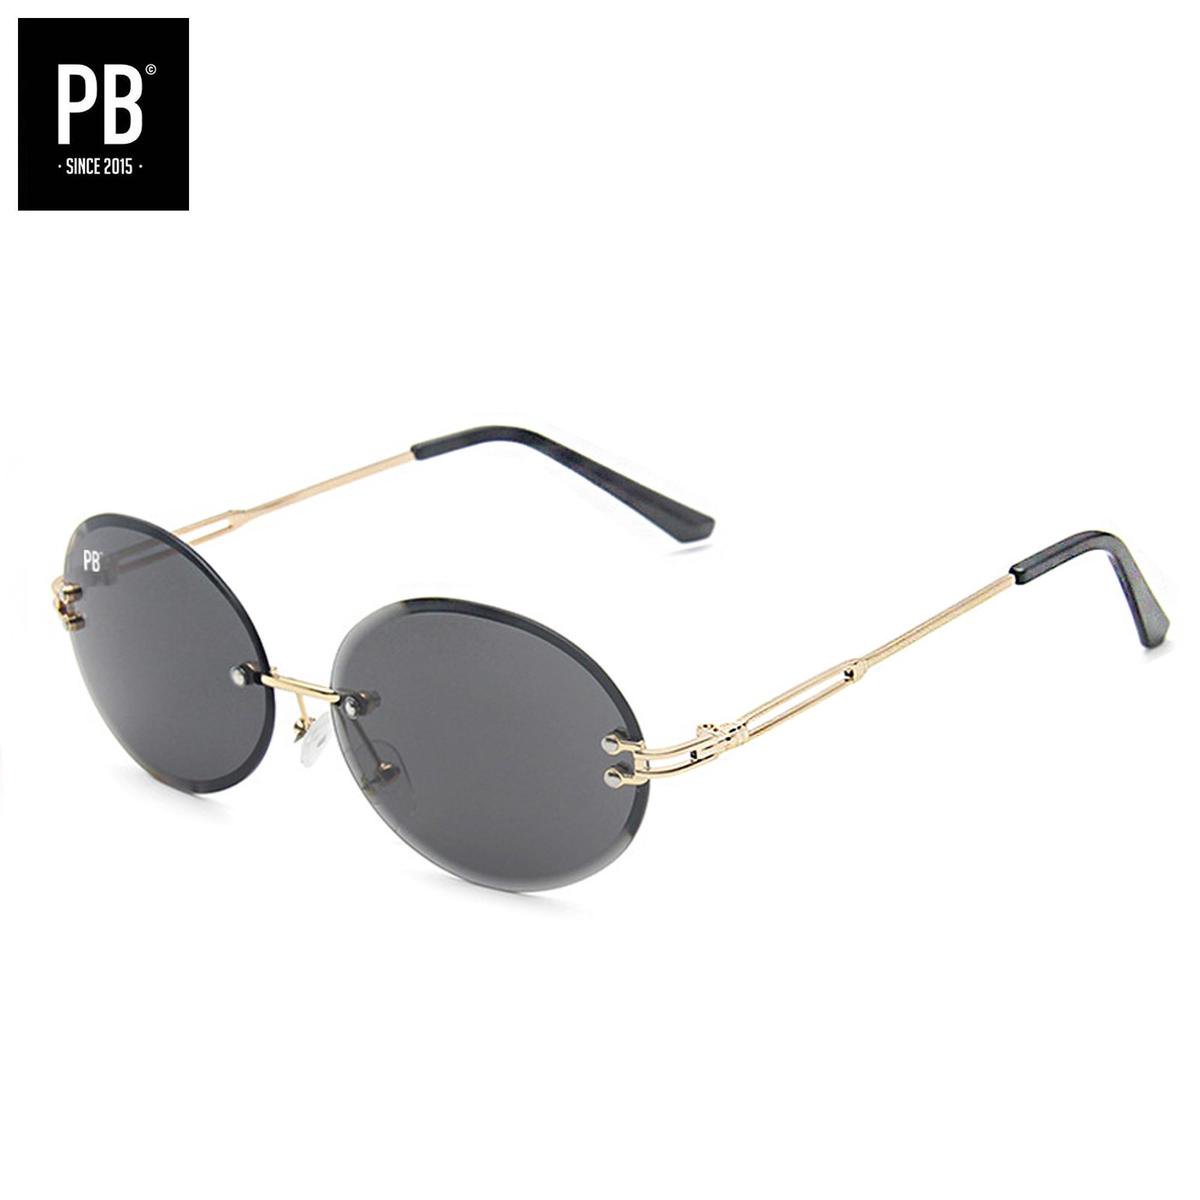 PB Sunglasses - Gipsy Oval Black. - Zonnebril heren en dames - Zwarte lens - Randloze zonnebril - Festival stijl